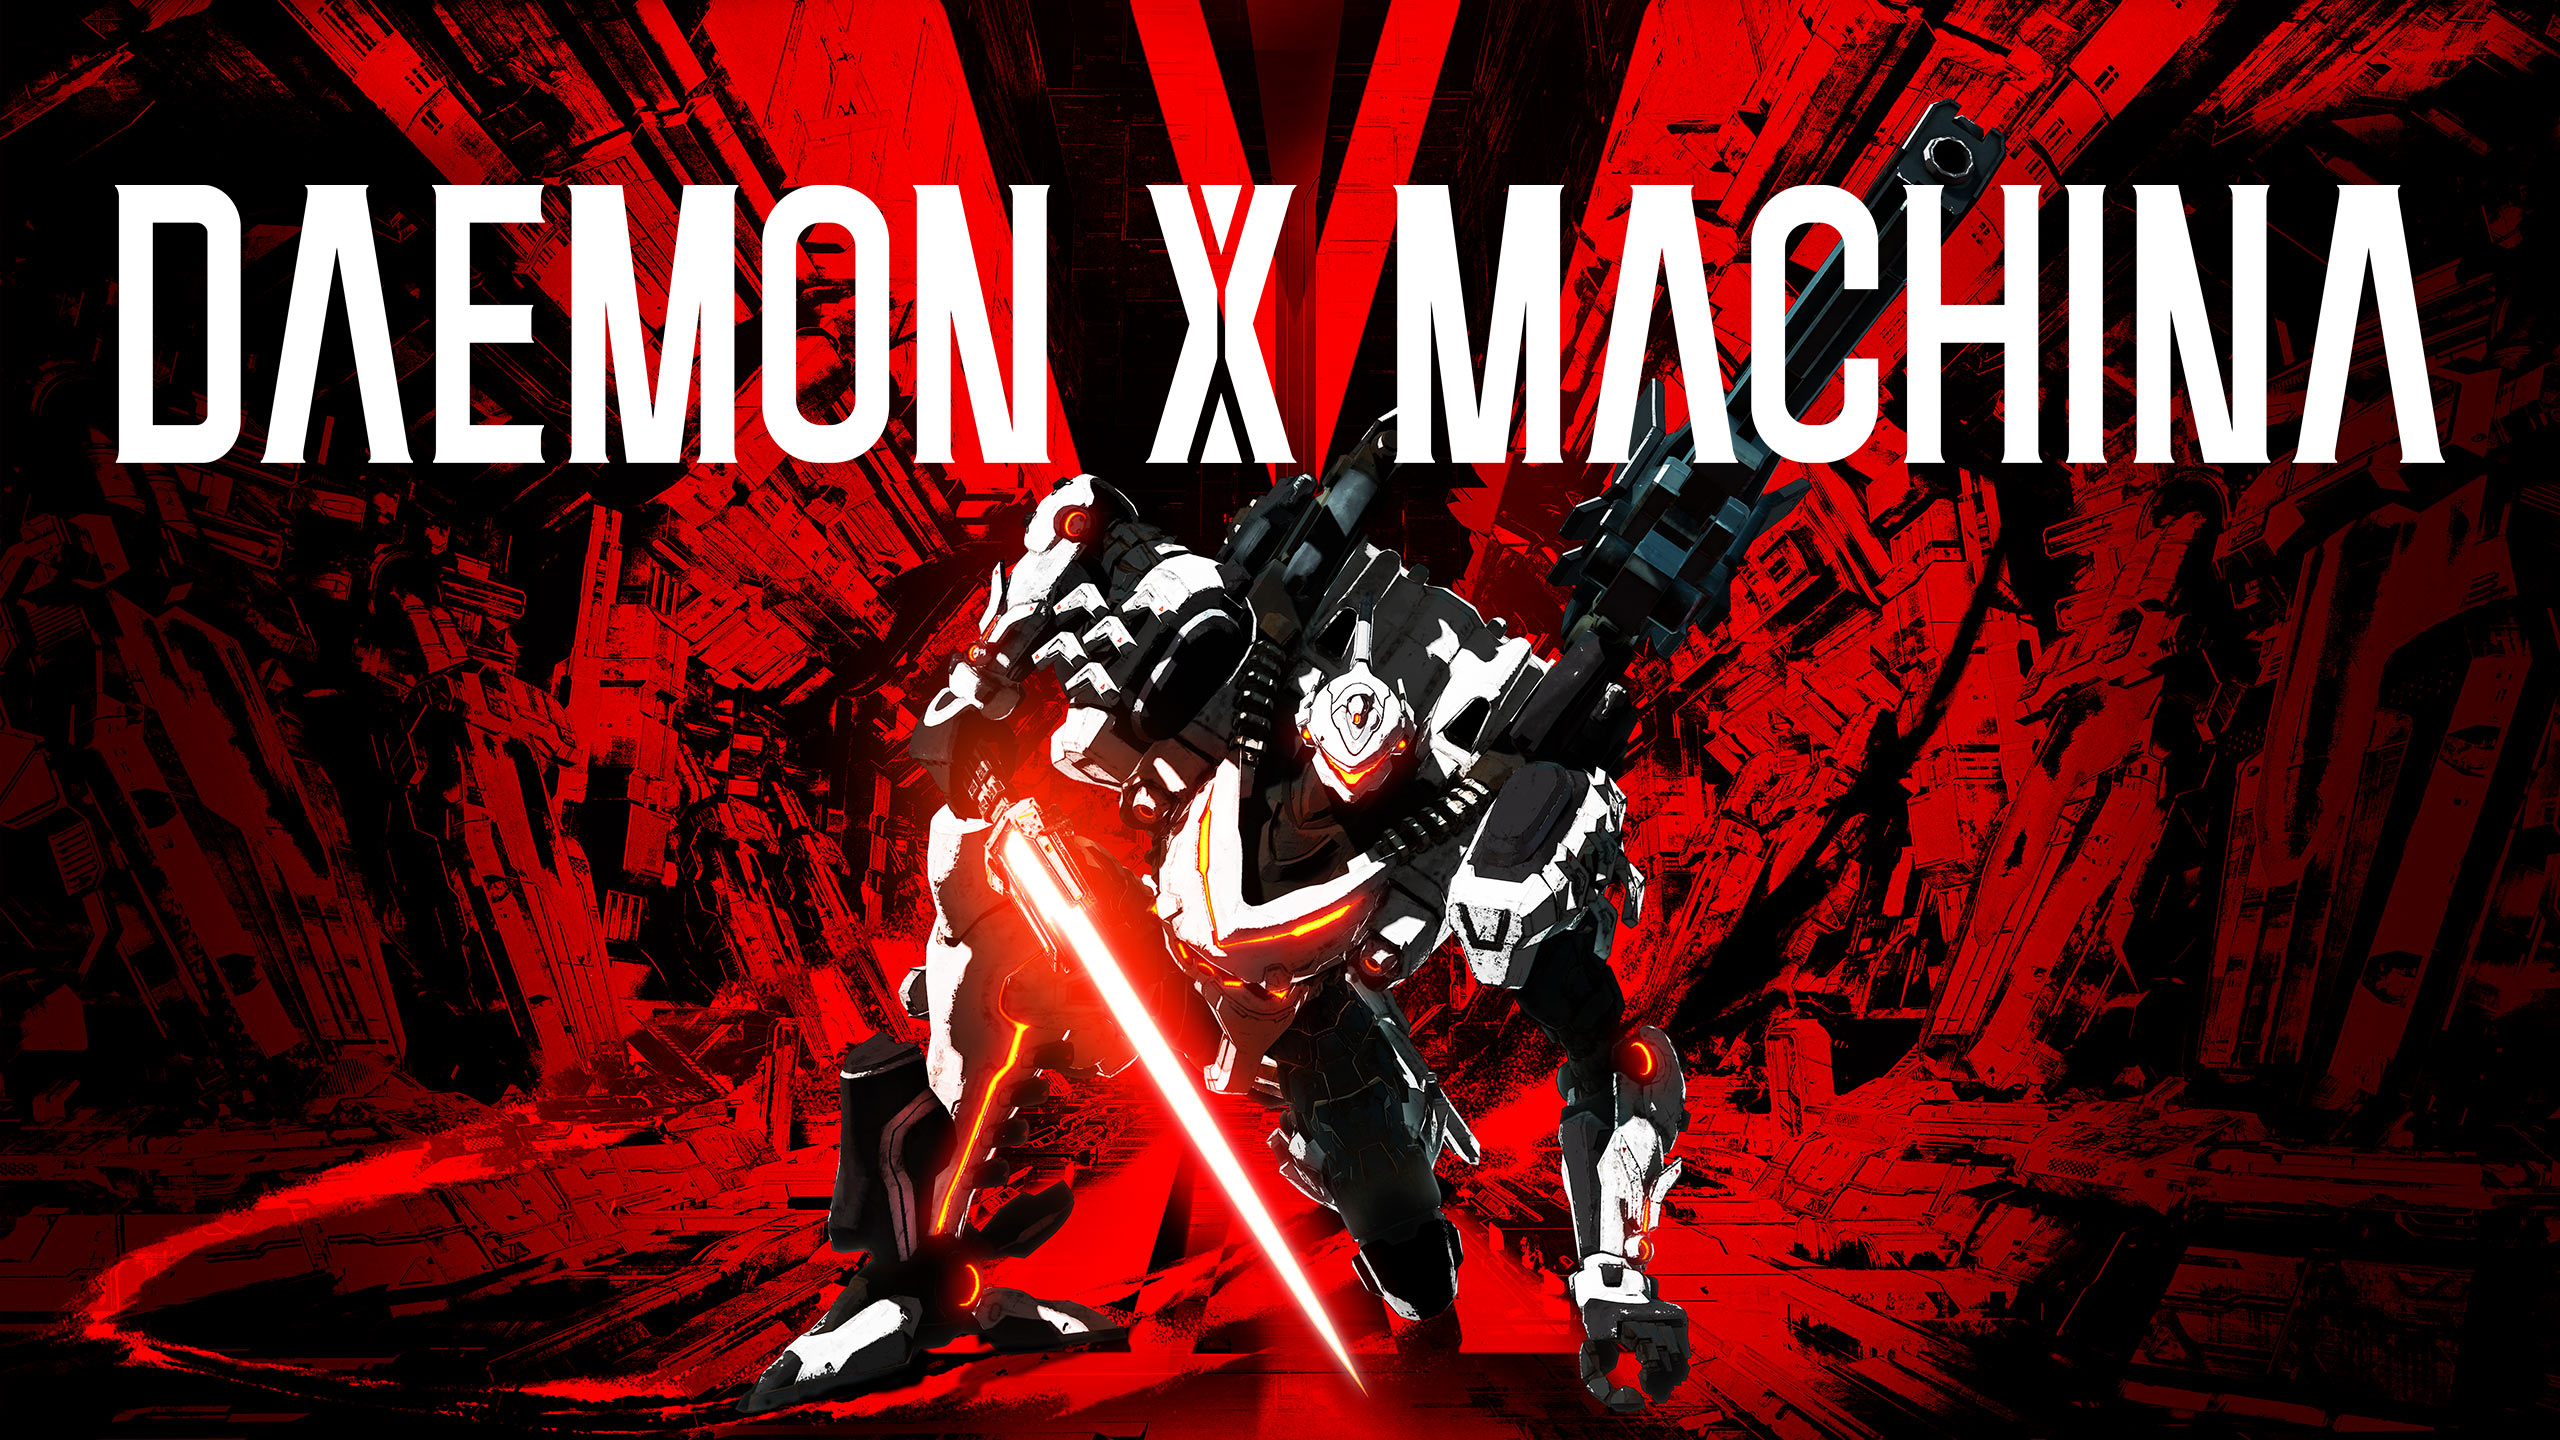 77 TL değerindeki Daemon X Machina Epic Games'te ücretsiz oldu.